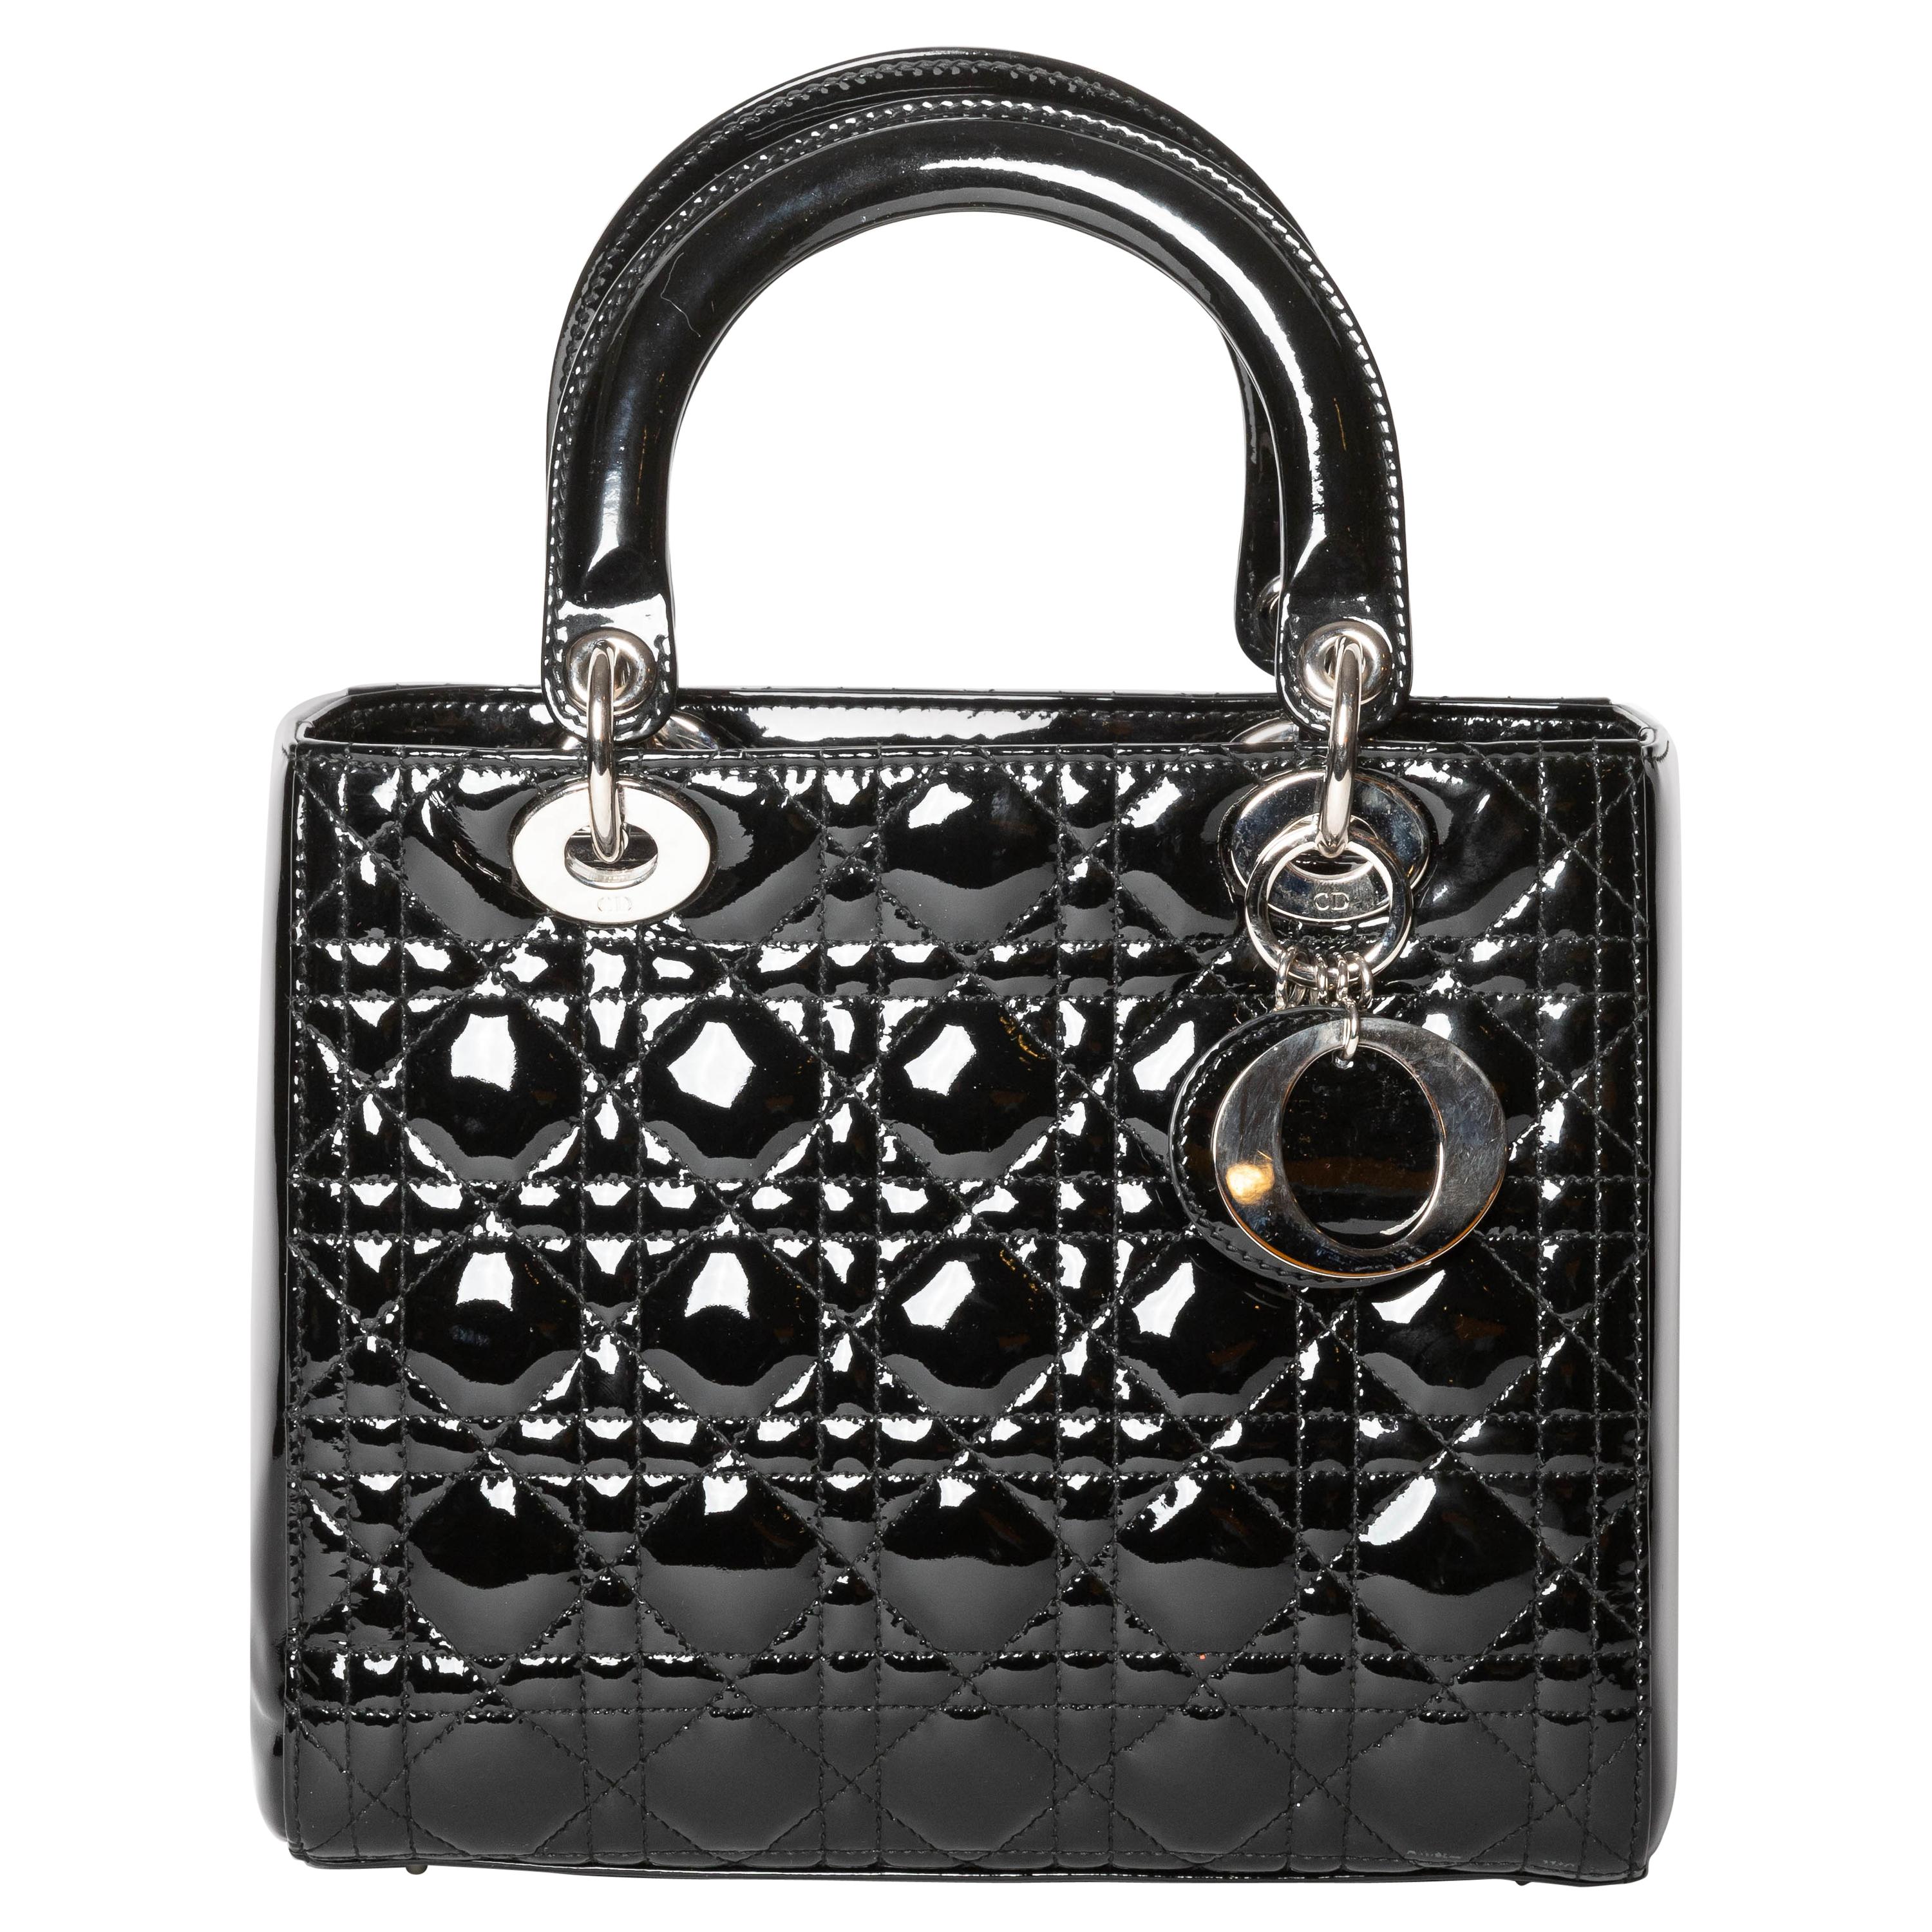 Lady Dior in Black Patent - Medium Size